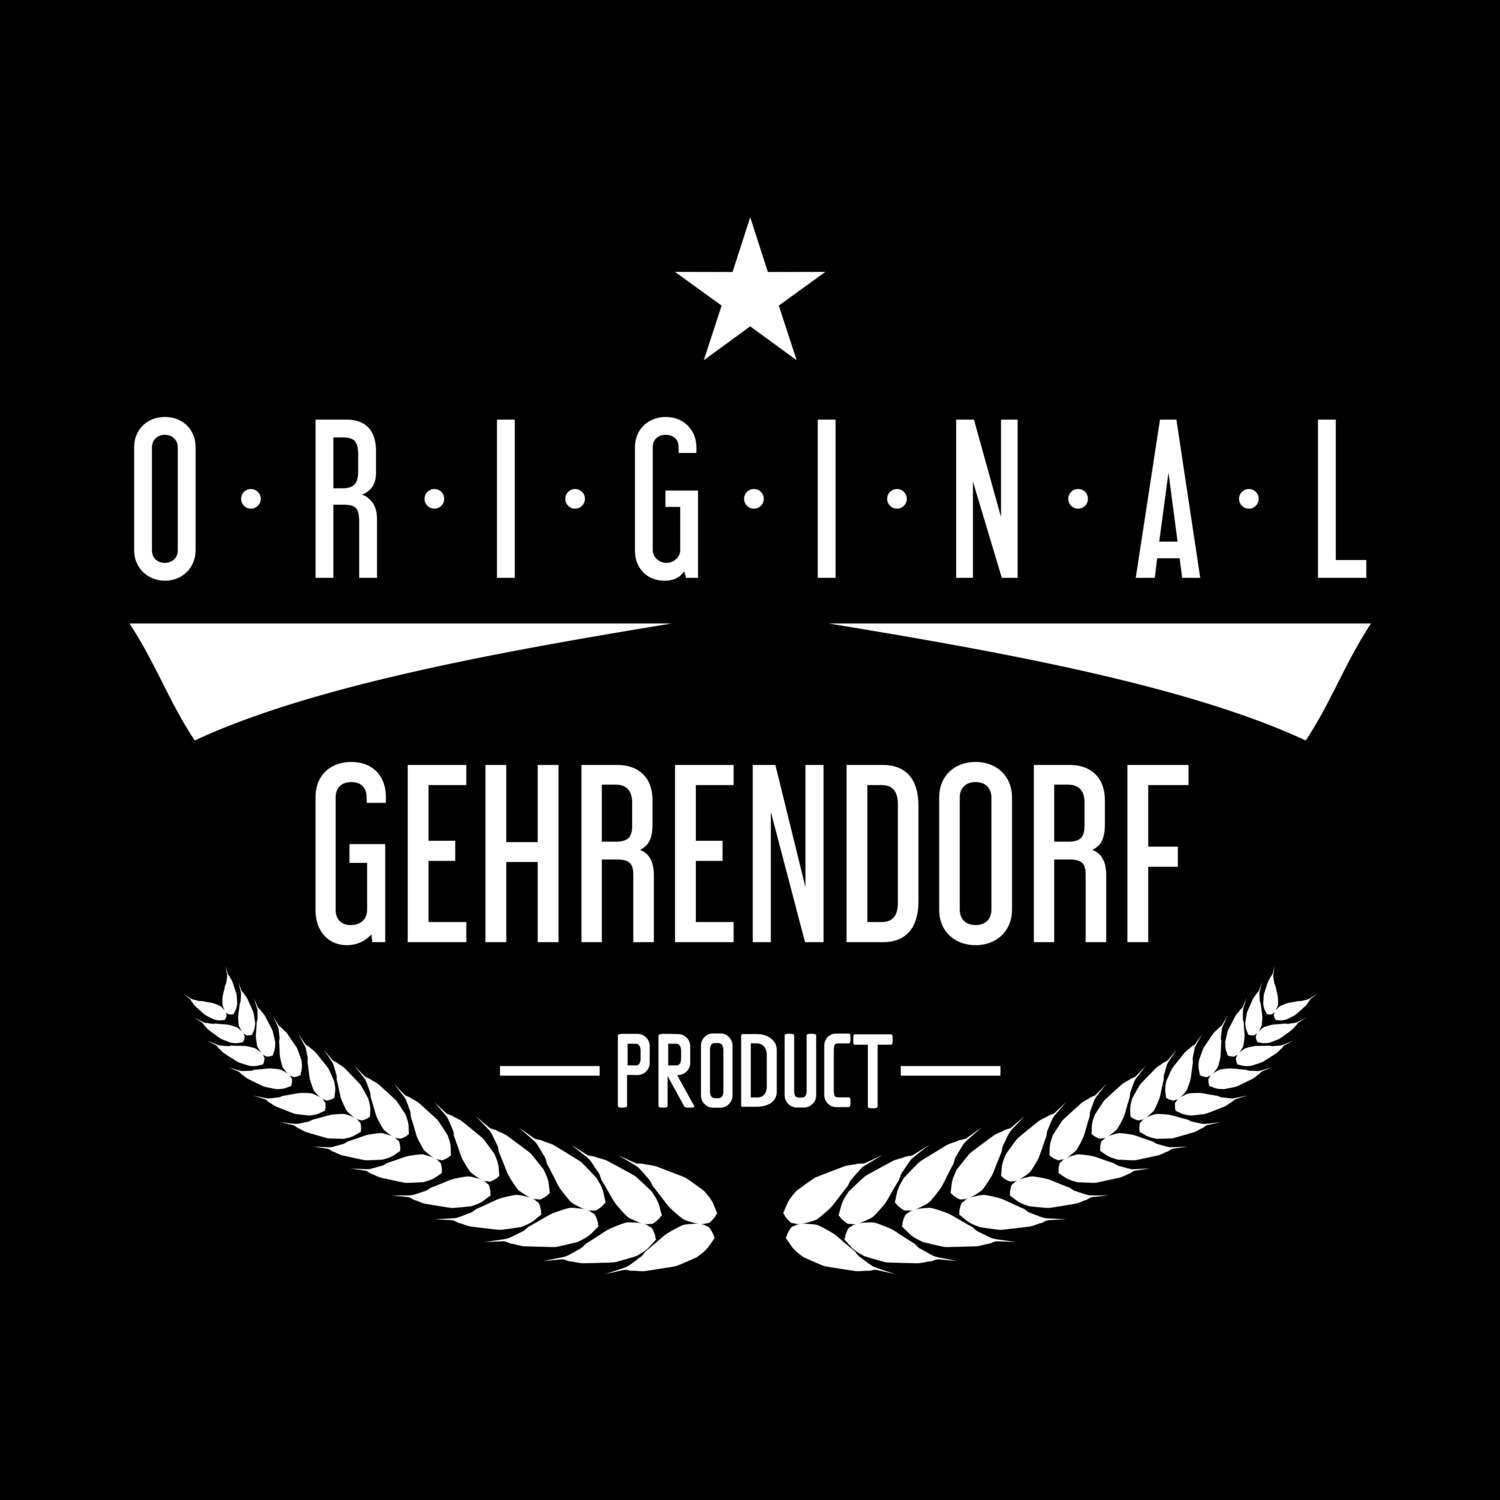 Gehrendorf T-Shirt »Original Product«